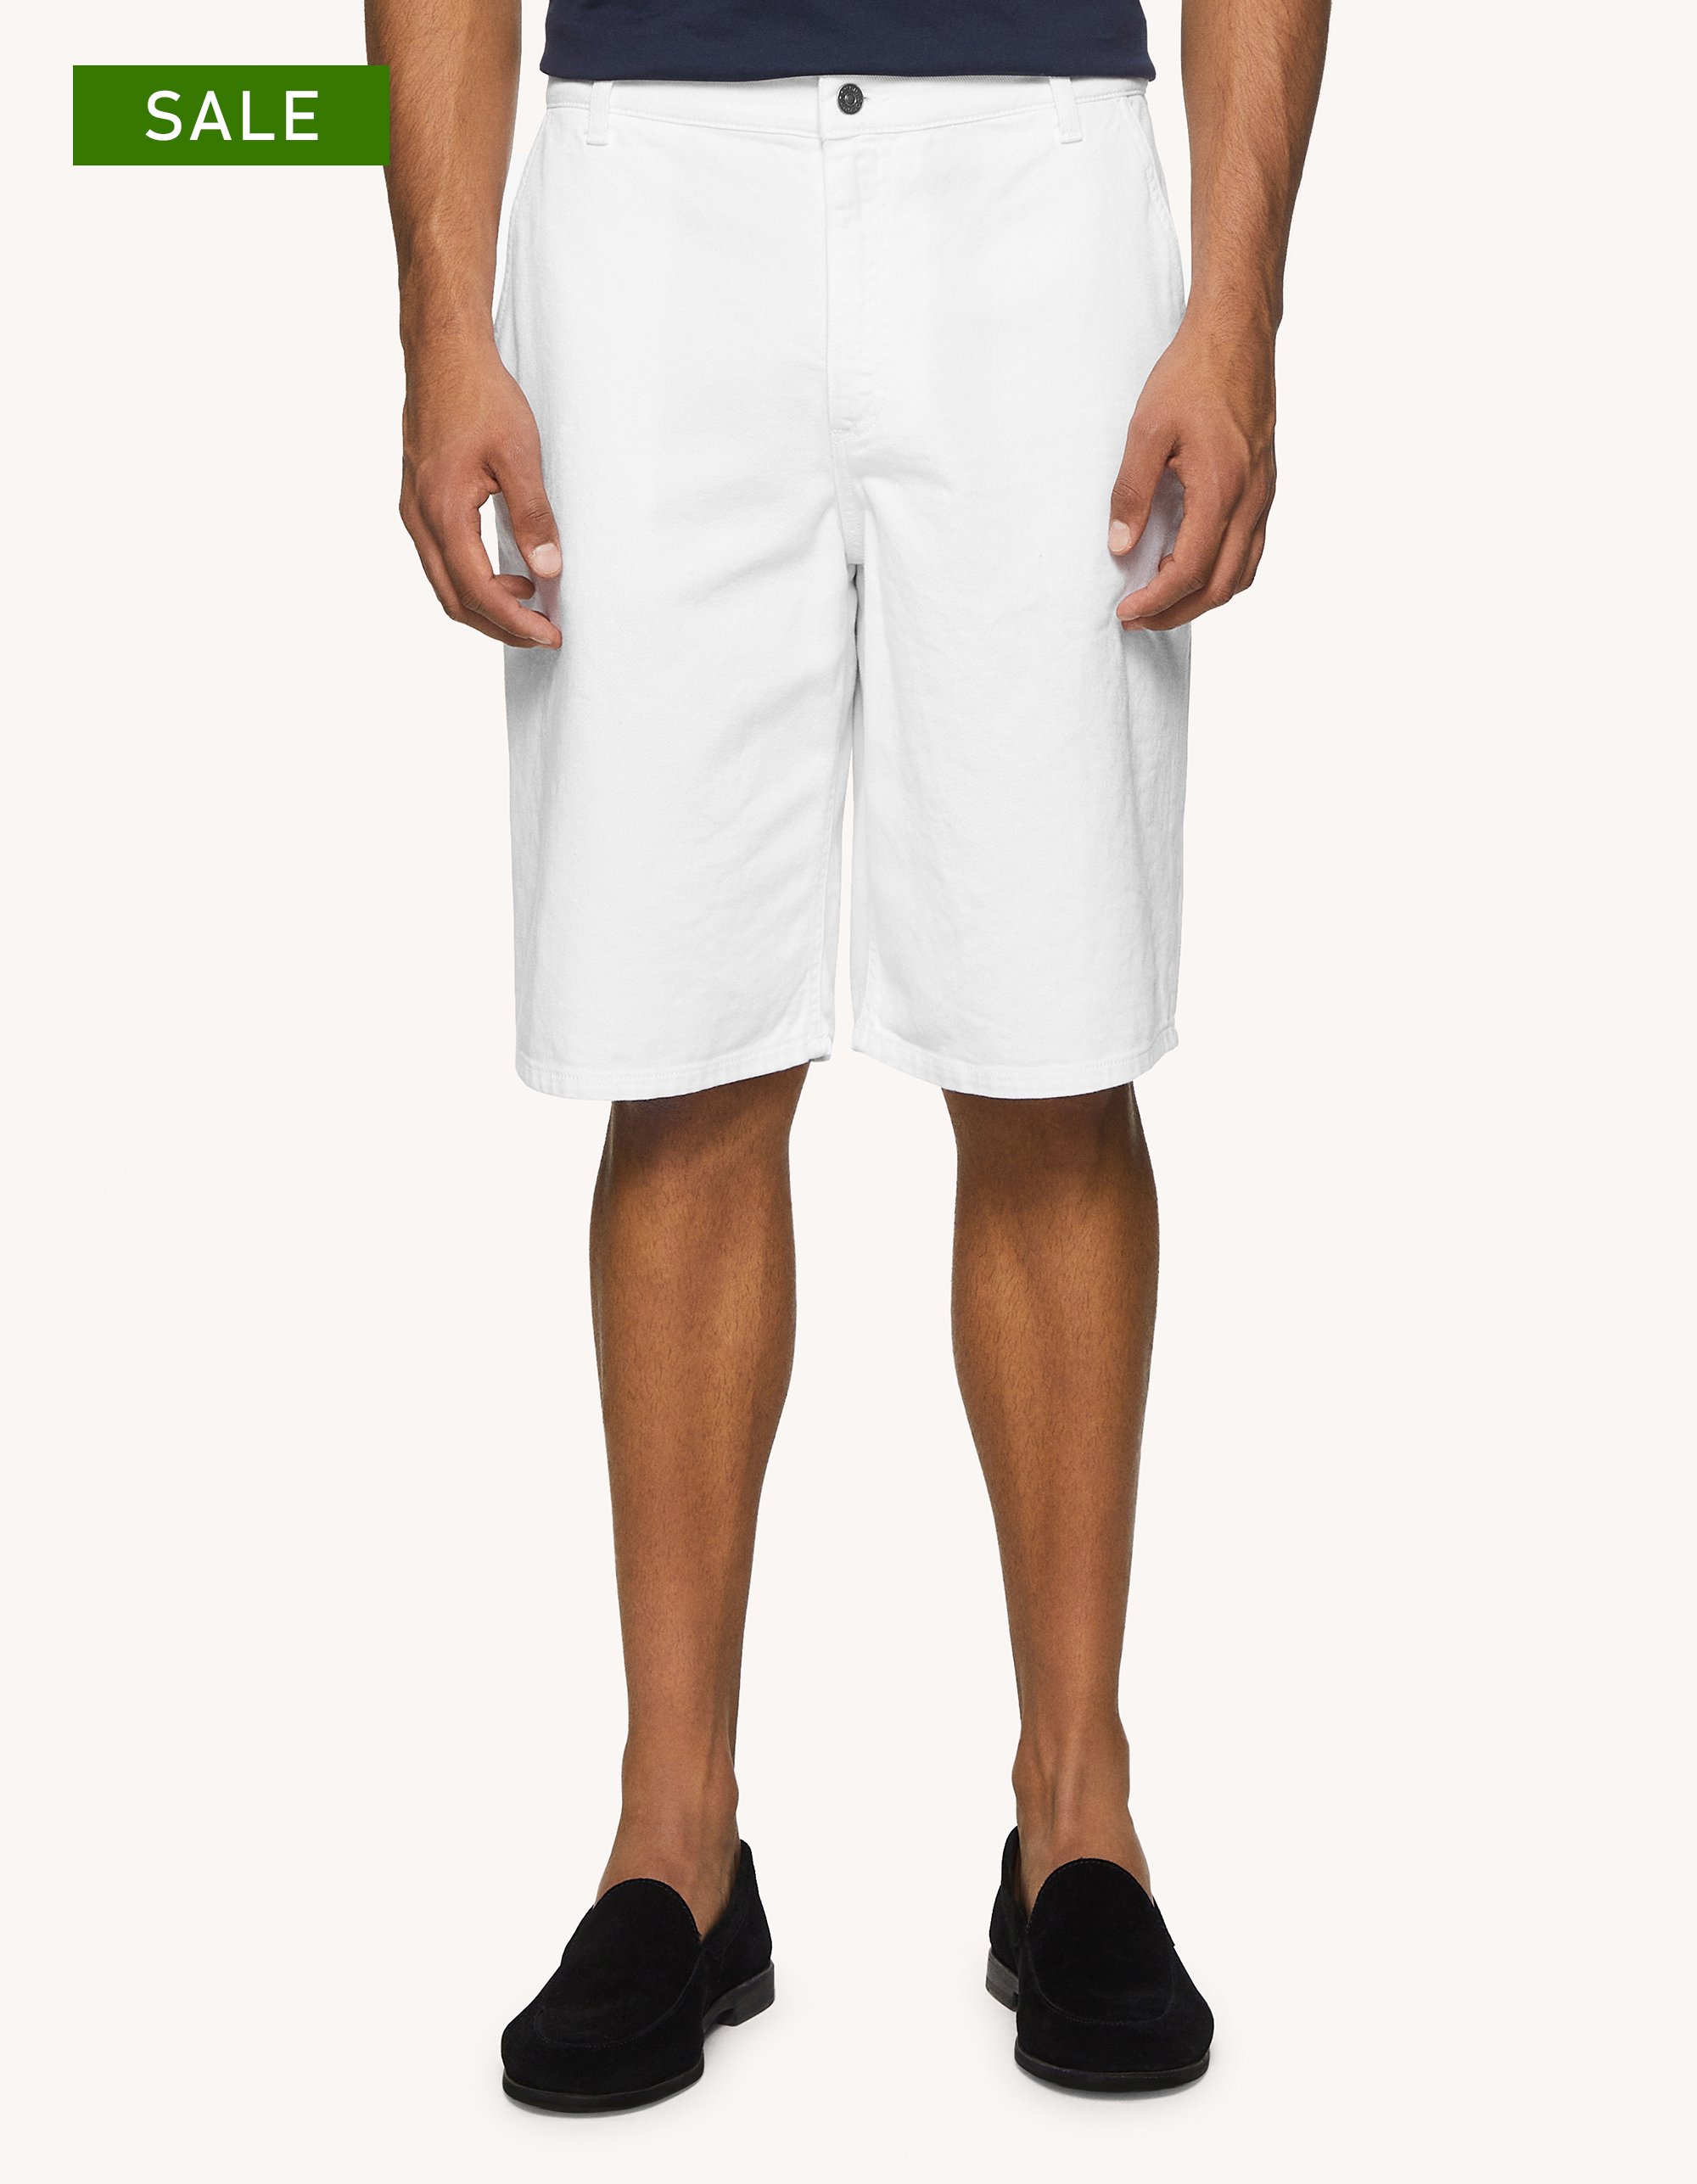 DOONDUPColin Bermuda shorts 2col